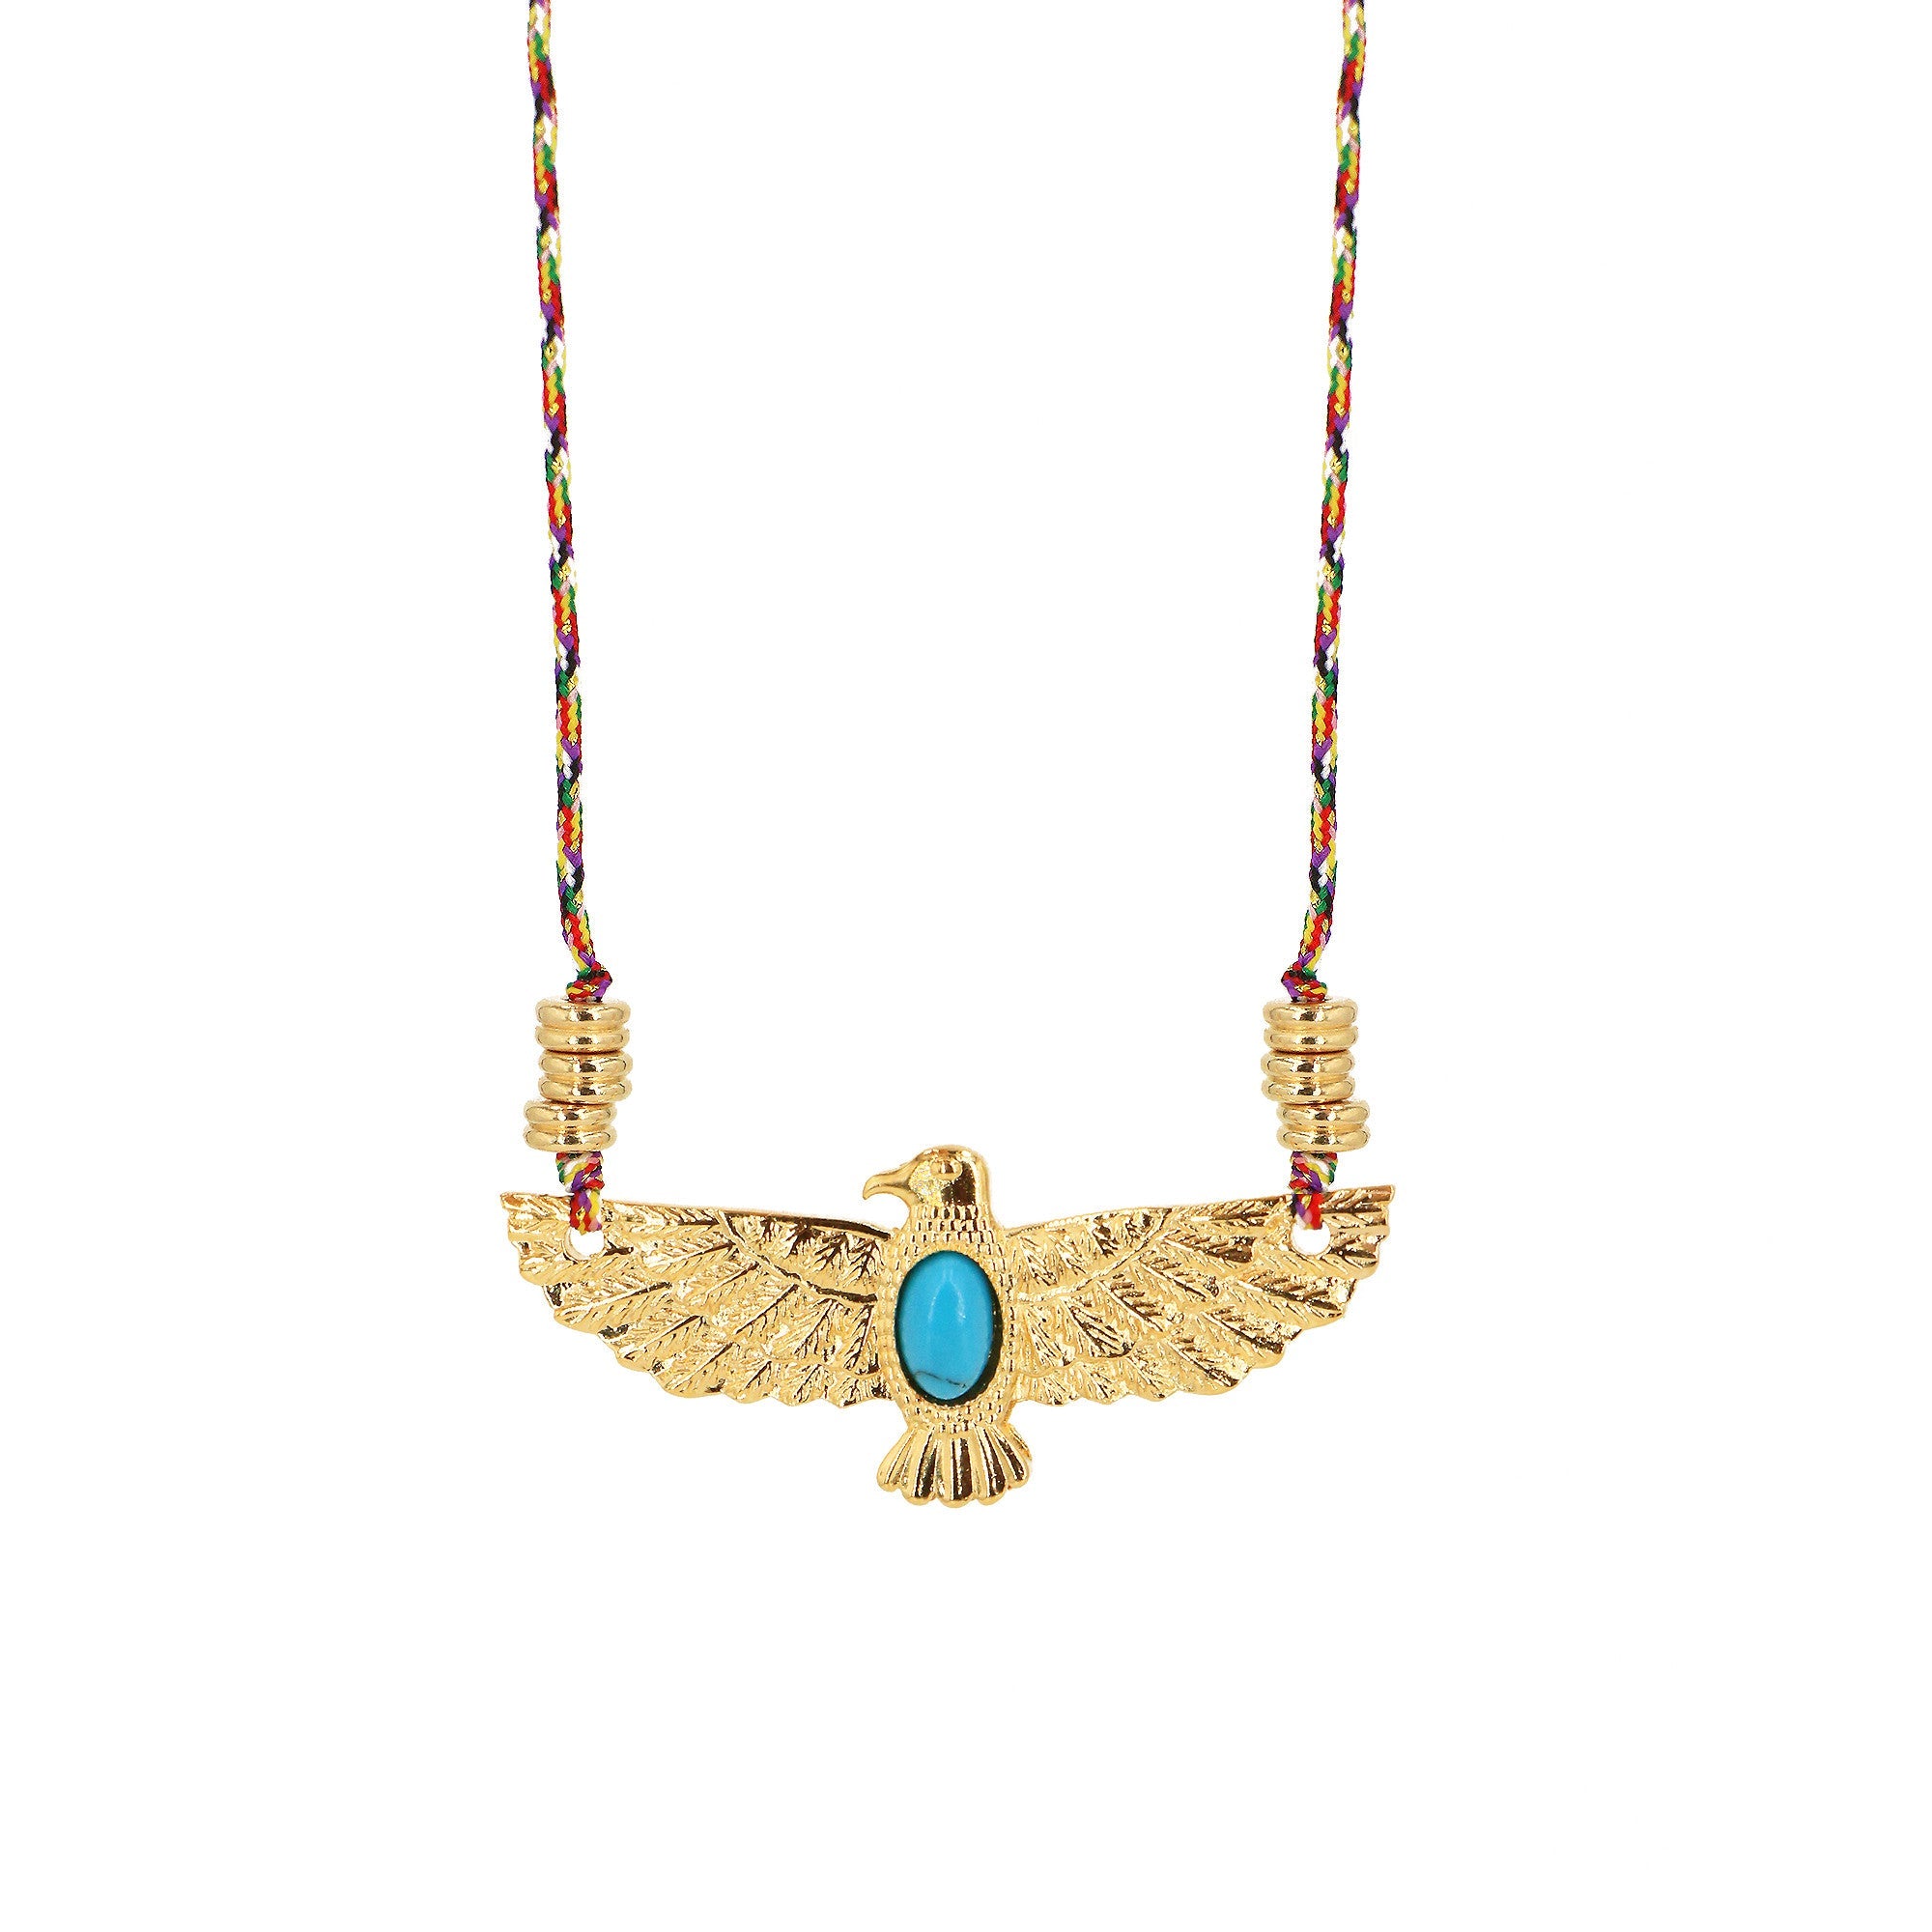 Birdy necklace (link)